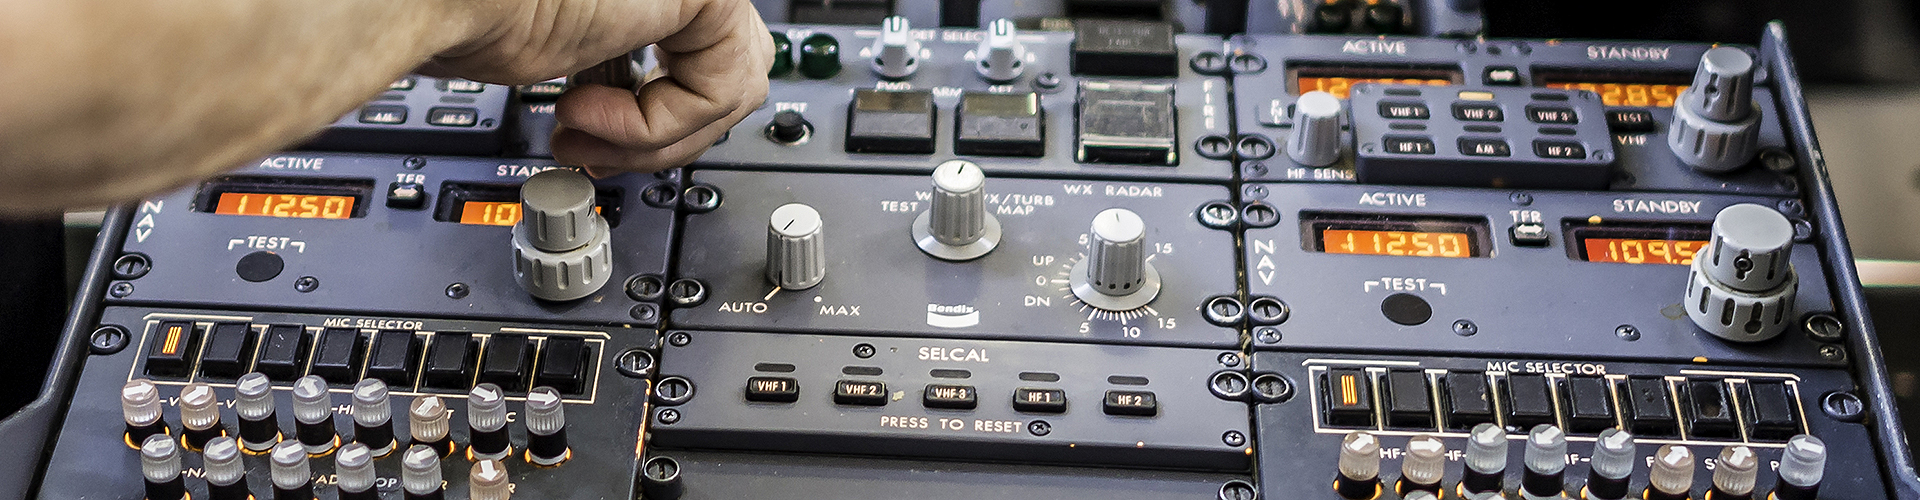 Aircraft radio control panel